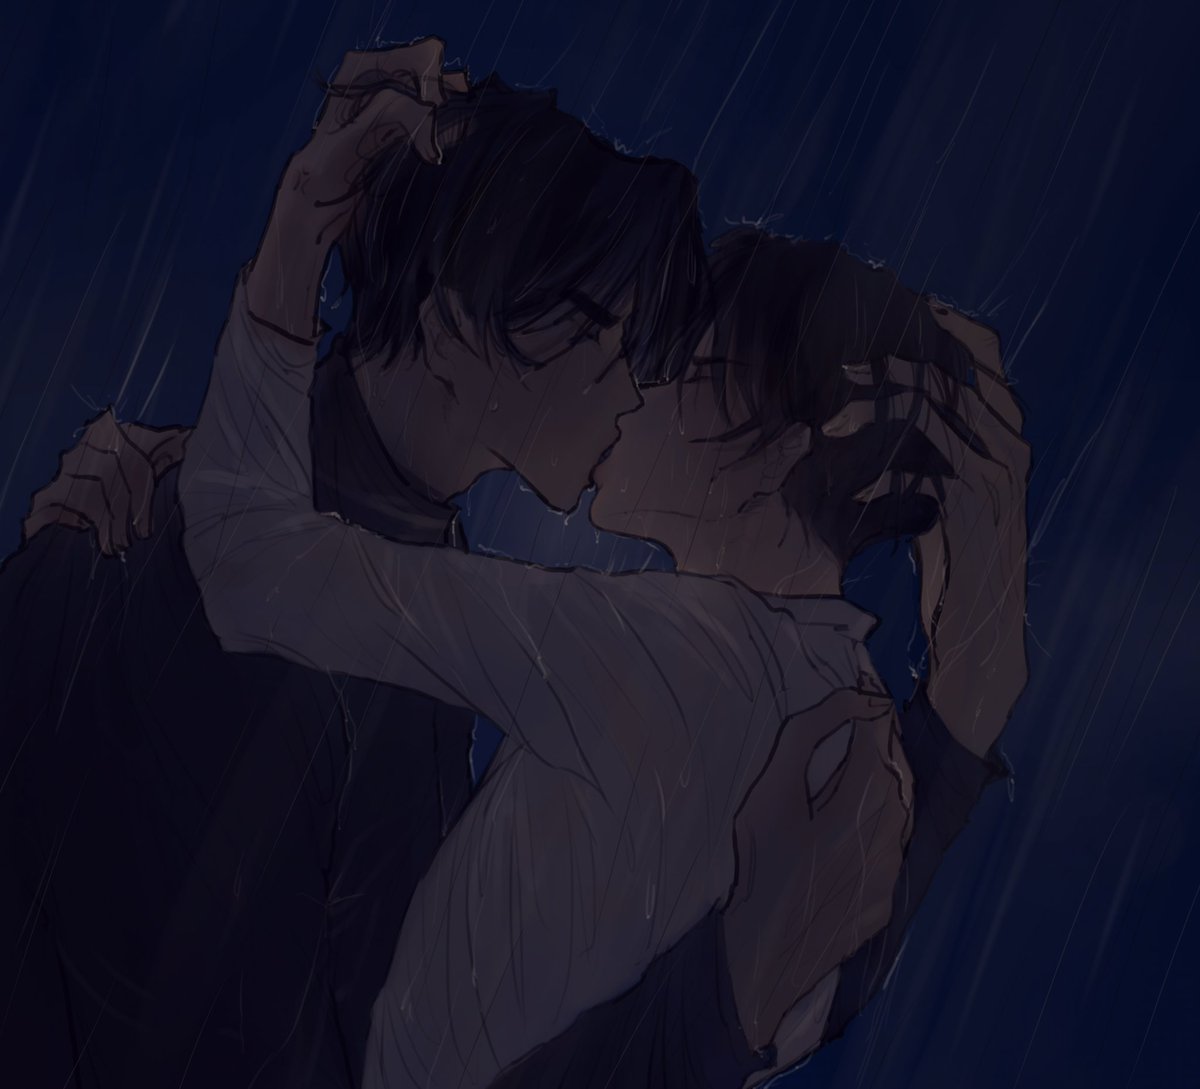 kissing in the rain
#joongdok #orv #kimdokja #yoojoonghyuk